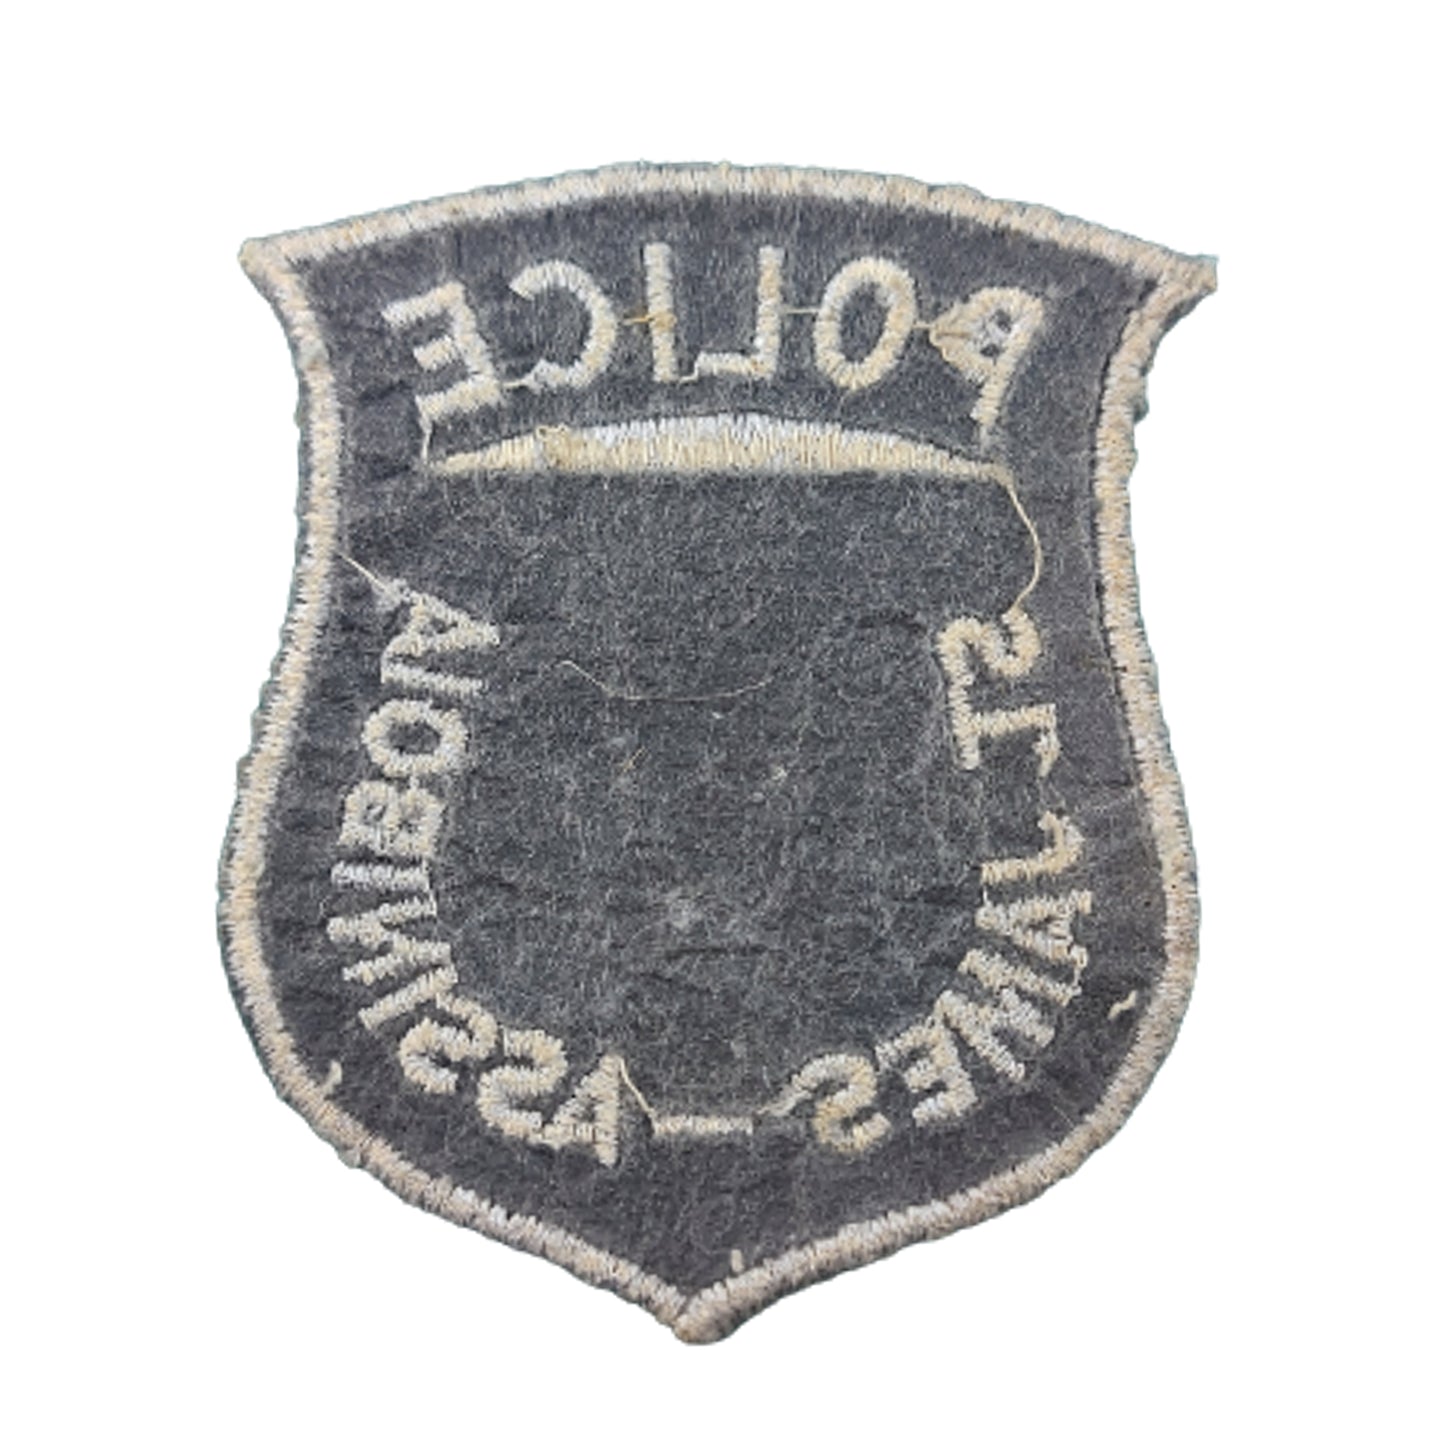 St.James Assiniboia Police Uniform Patch